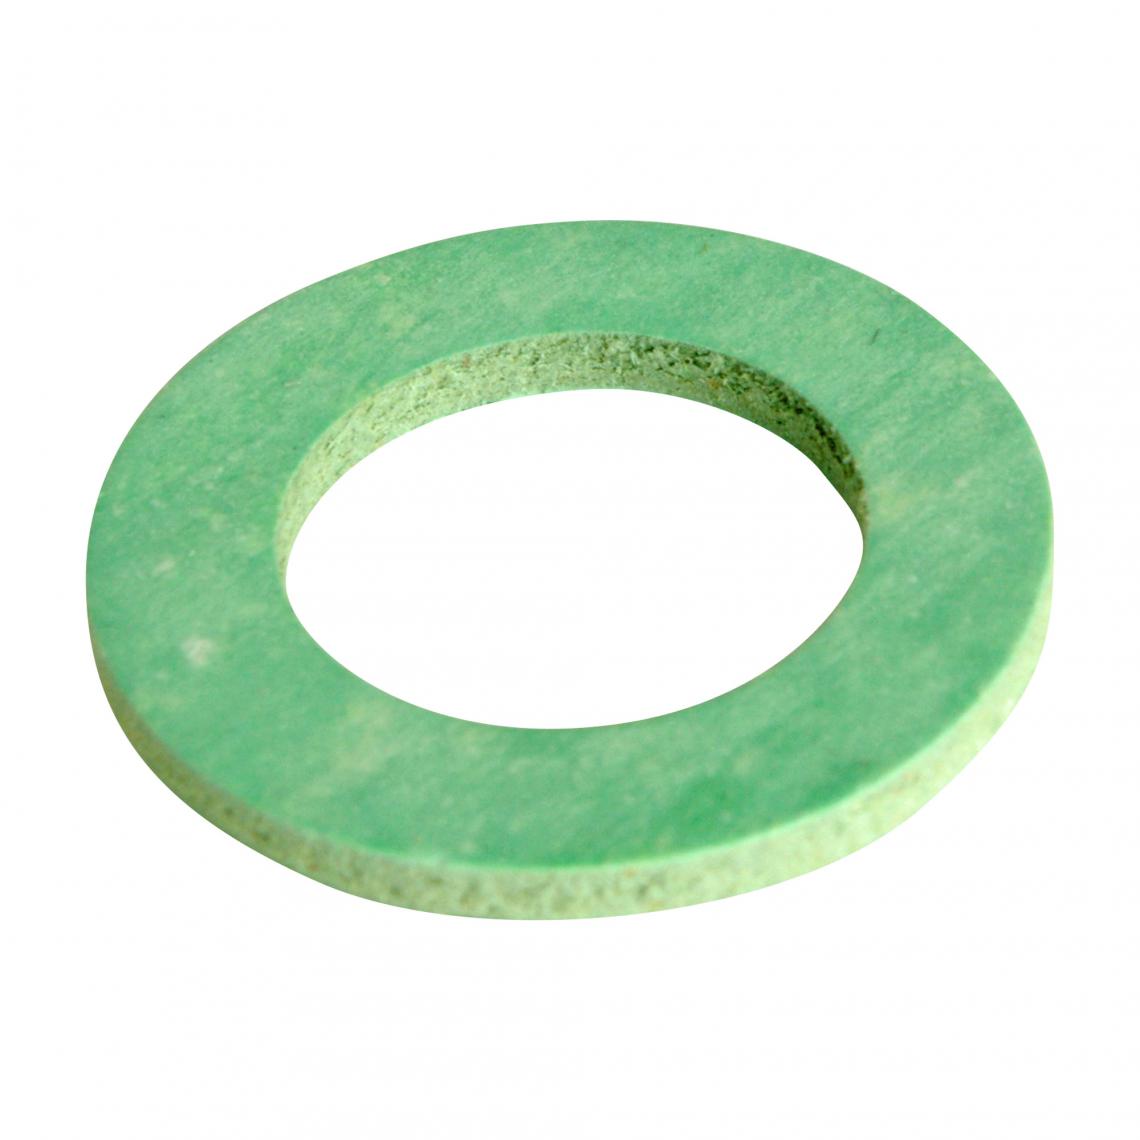 Somatherm For You - Lot de 10 joints fibre vert 15/21 - Mastic, silicone, joint